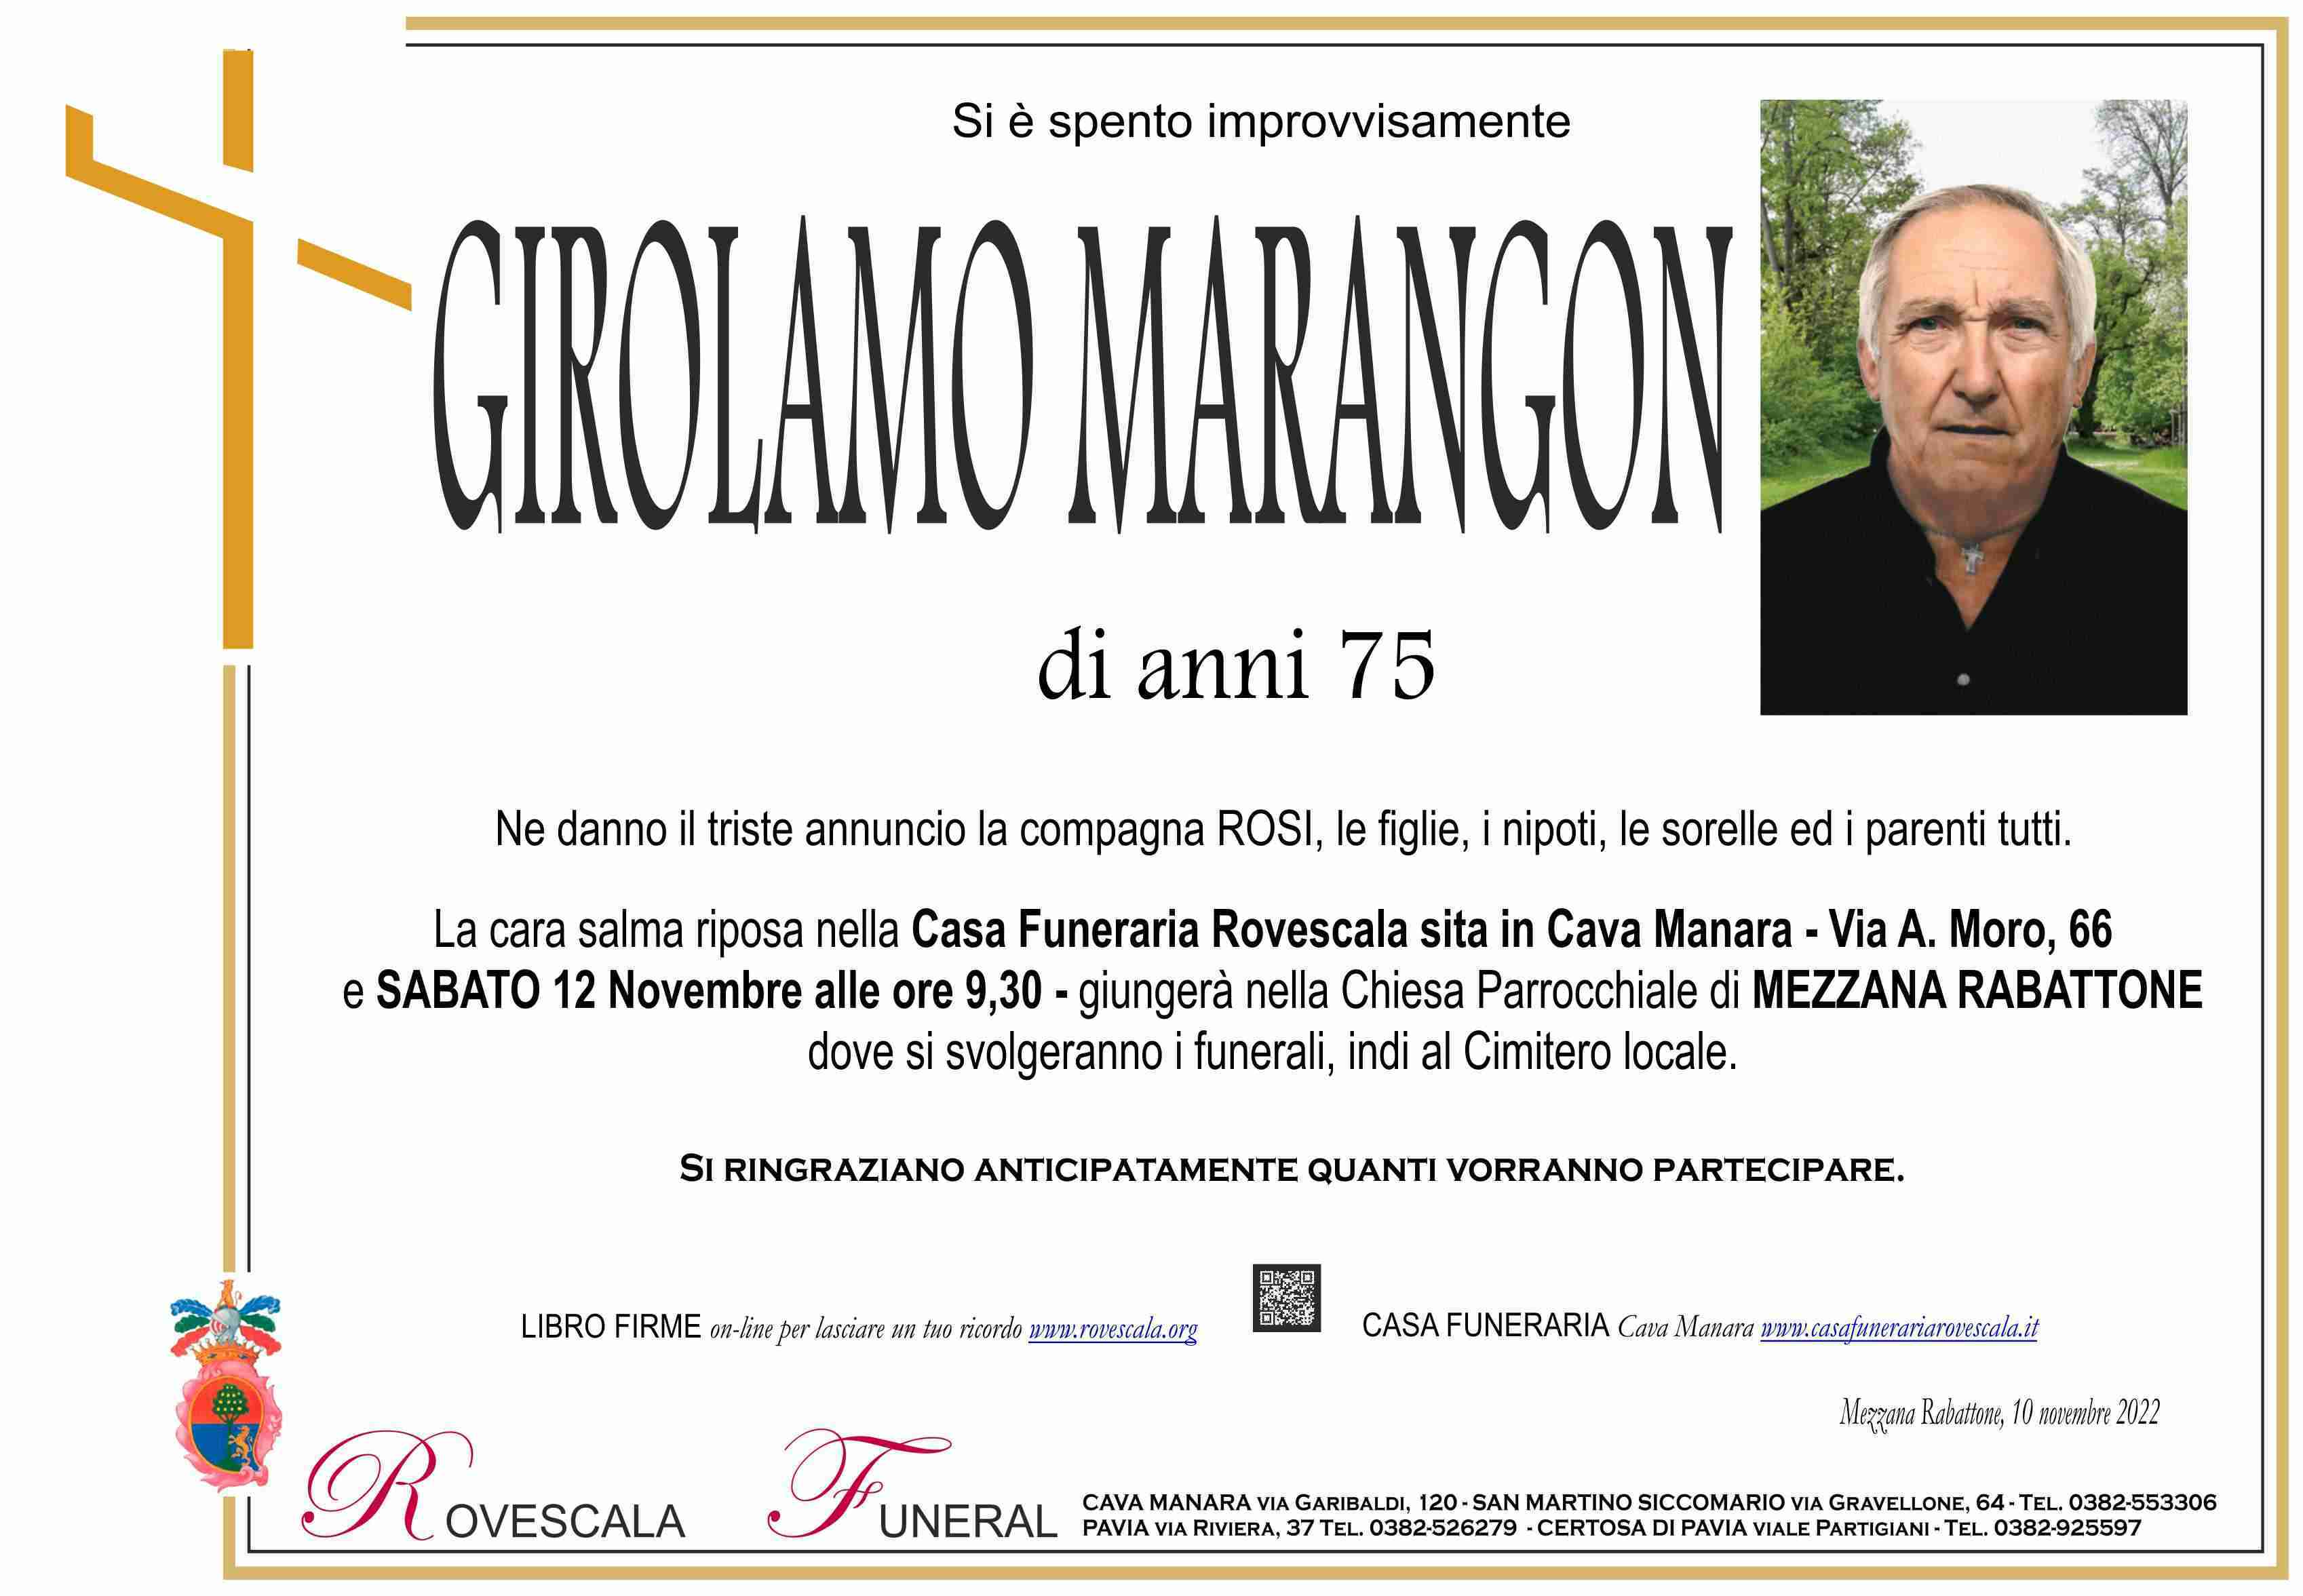 Girolamo Marangon